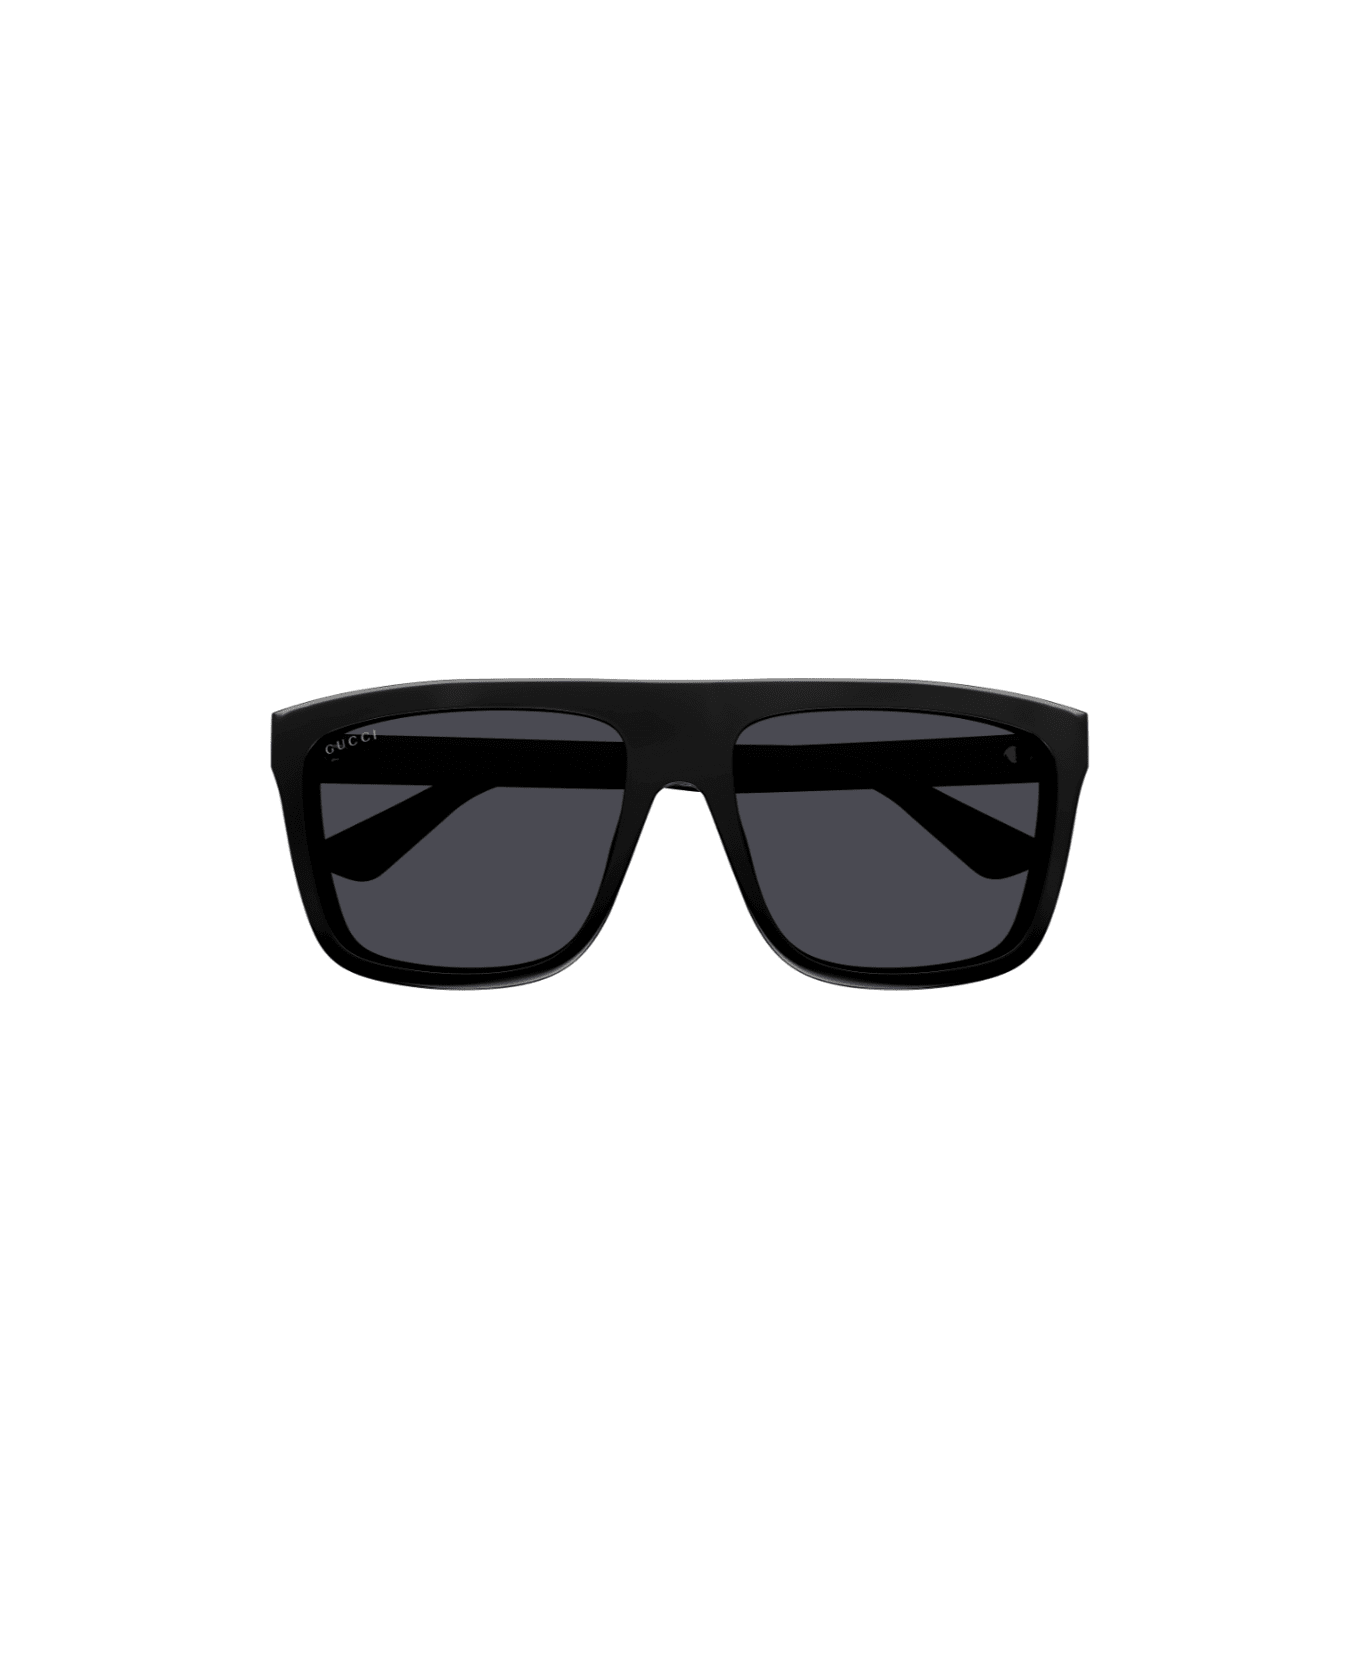 Gucci Eyewear GG0748 001 Sunglasses